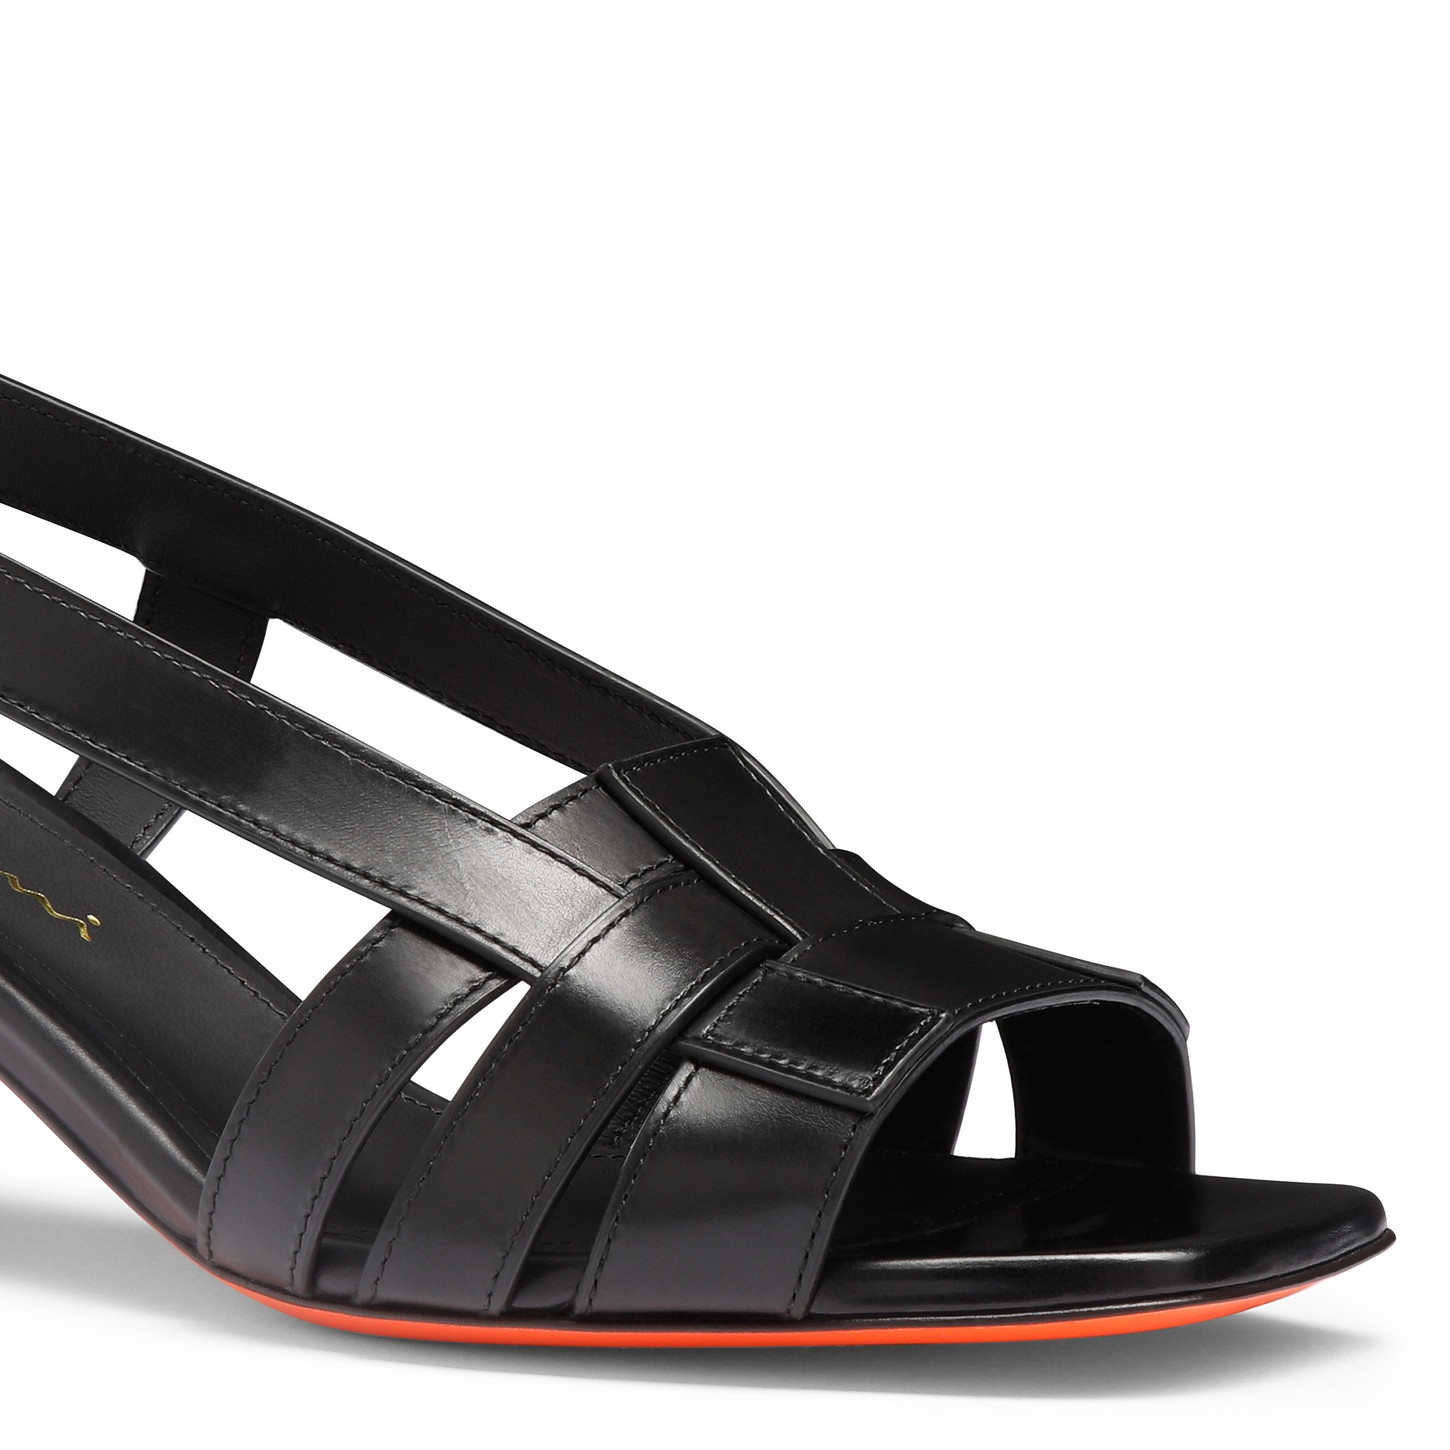 Women's black leather mid-heel Beyond sandal - 6